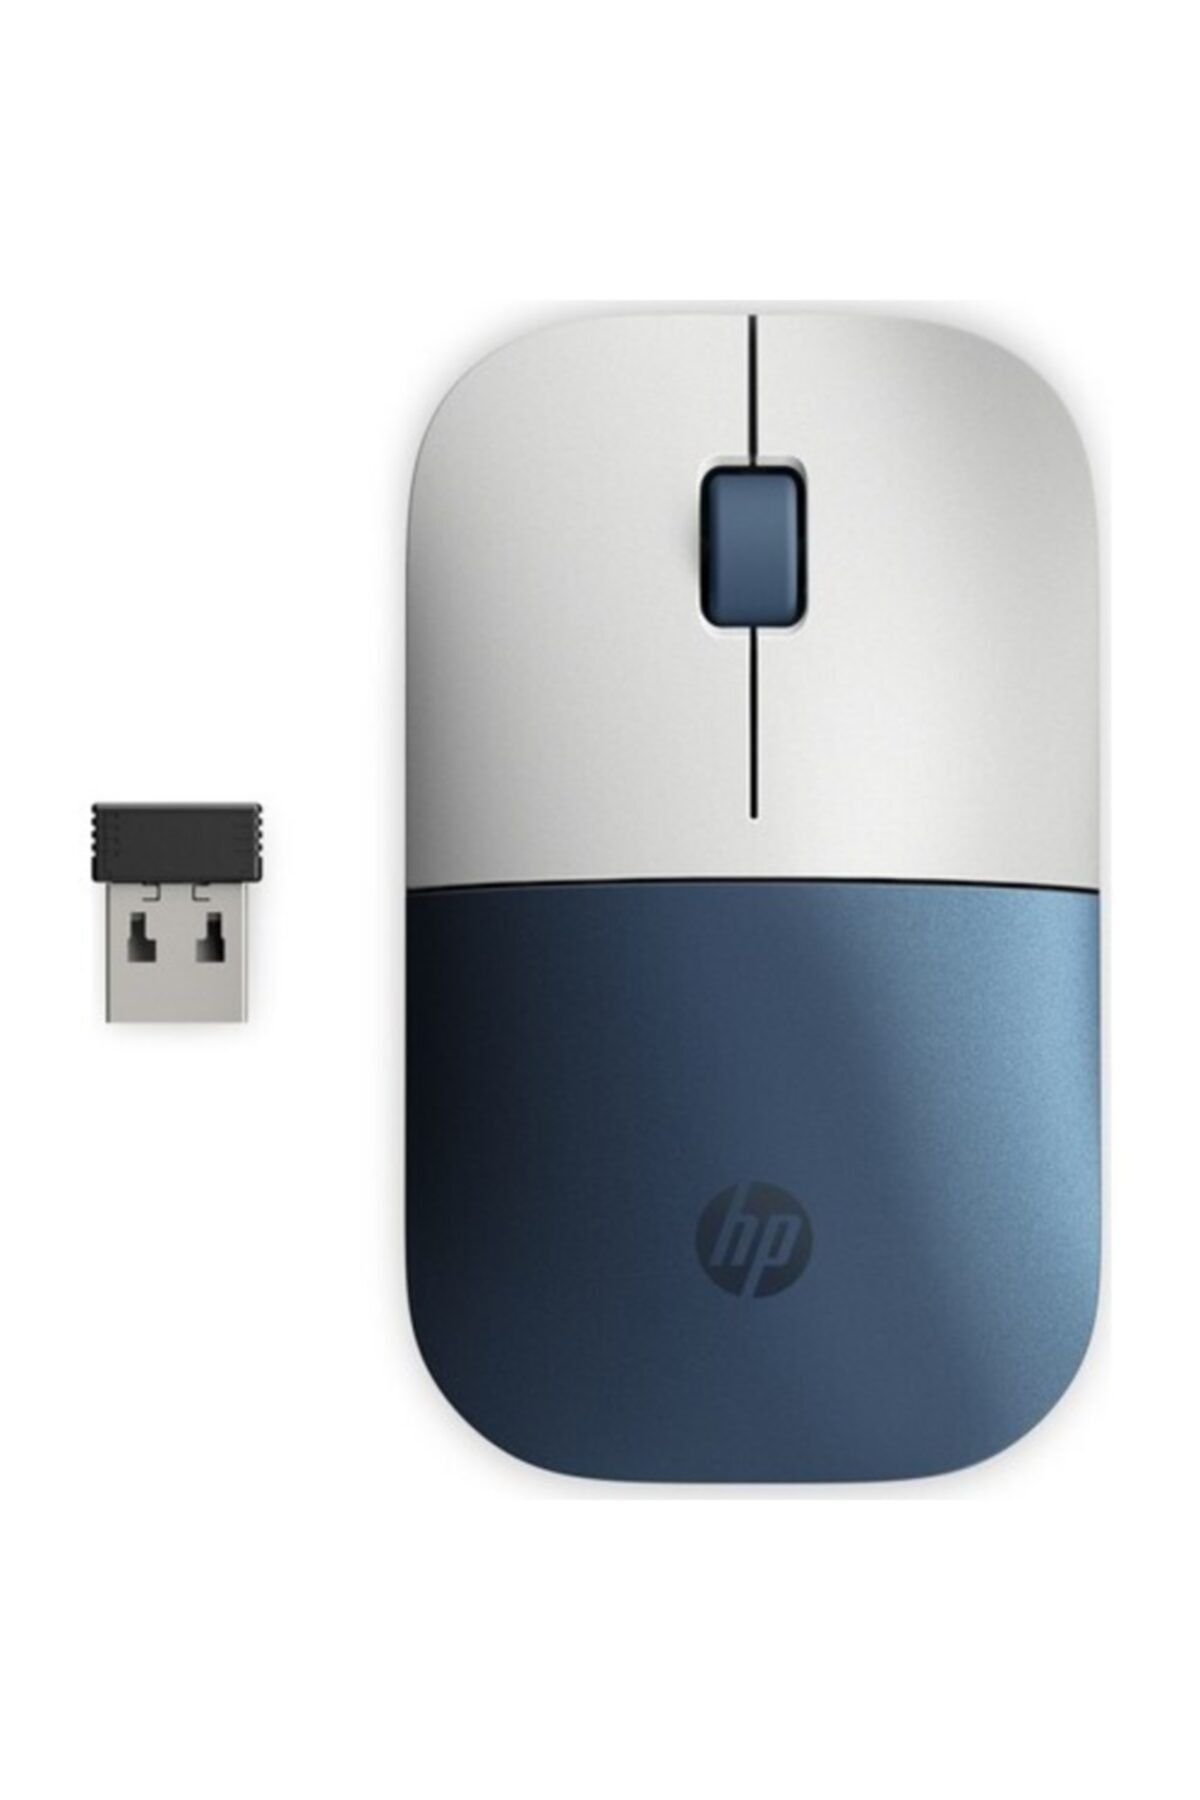 HP Z3700 Kablosuz Ince & Sessiz Mouse - Siyah & Orman Denizi Mavisi - 171d9aa